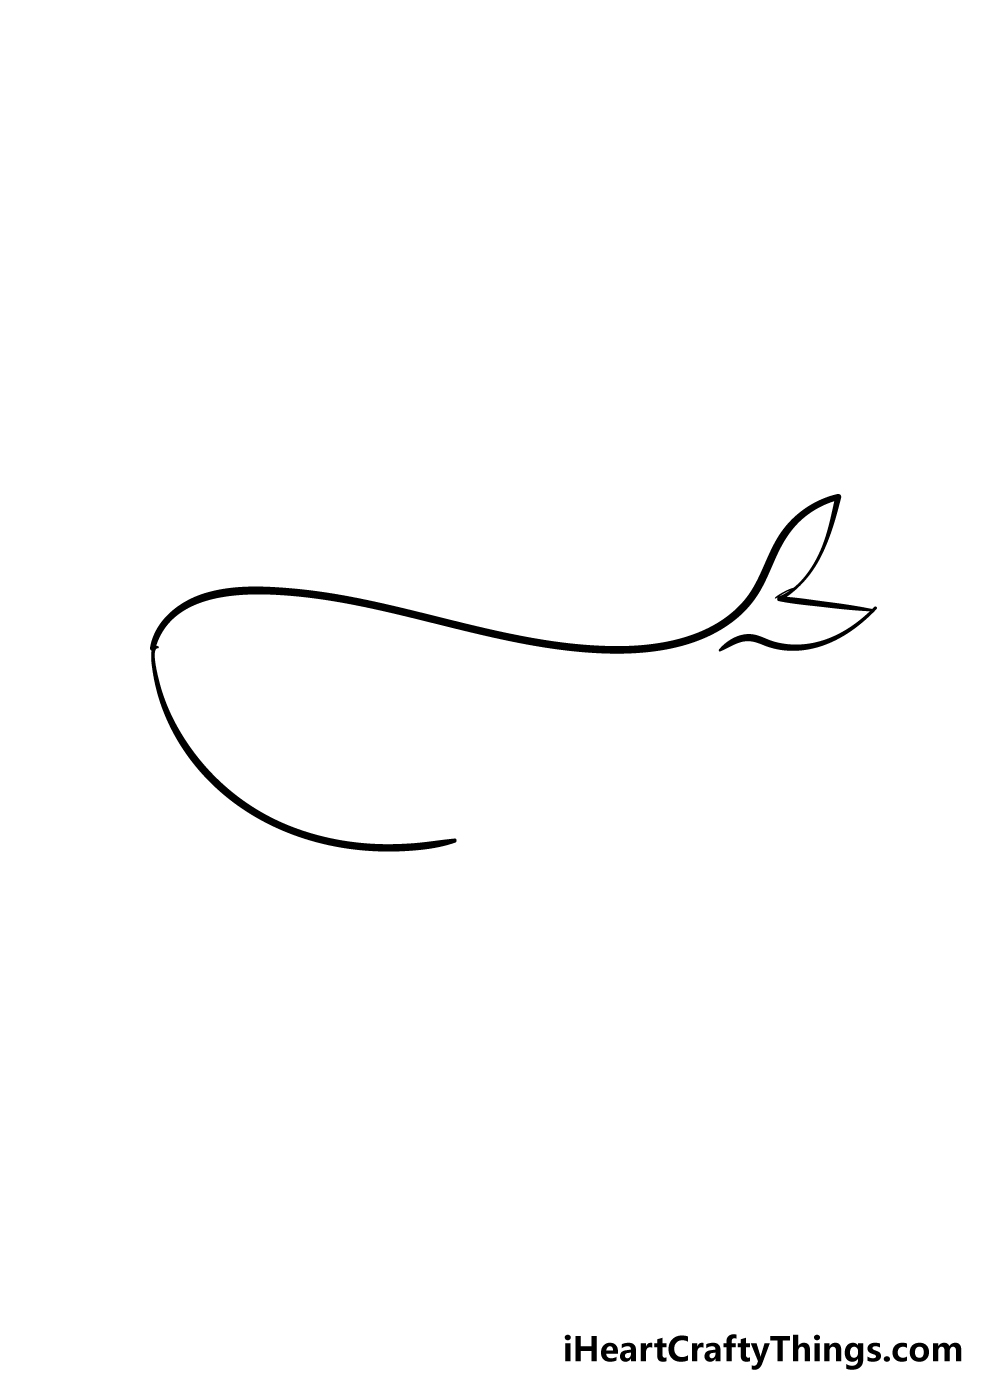 vẽ cá voi bước 2